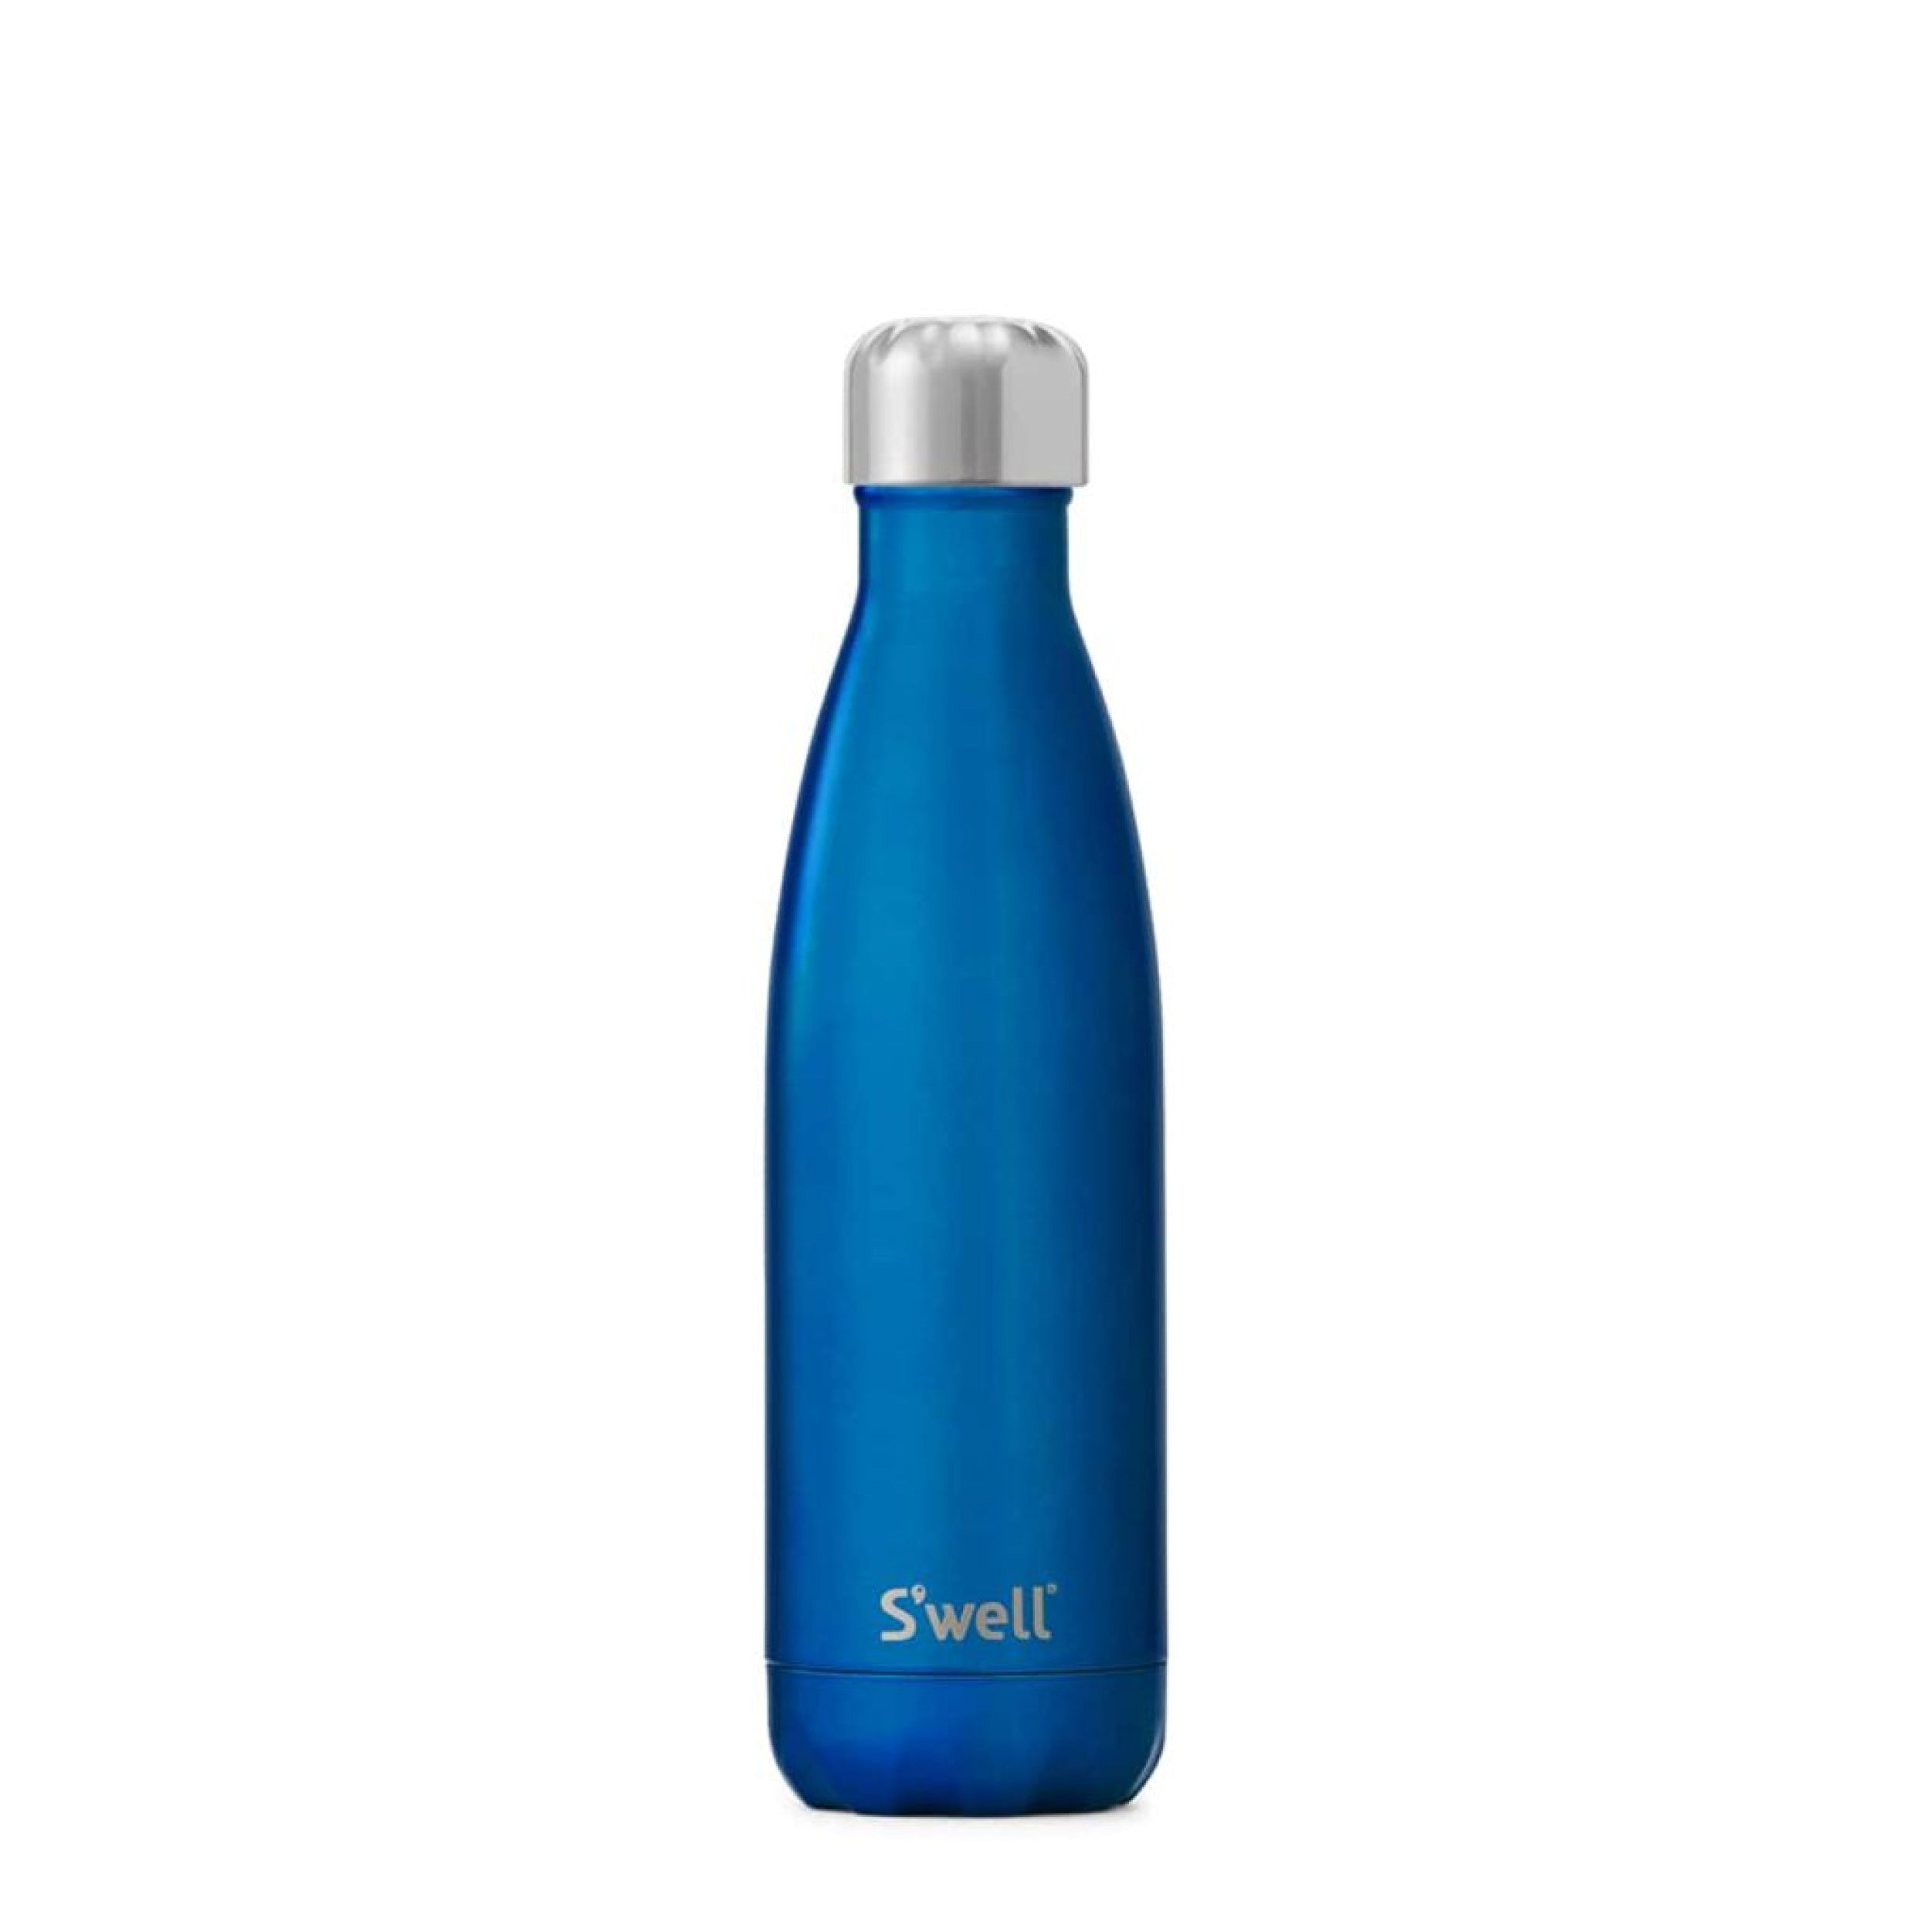 500 mL Water Bottle - Natural Spring Water - Evian